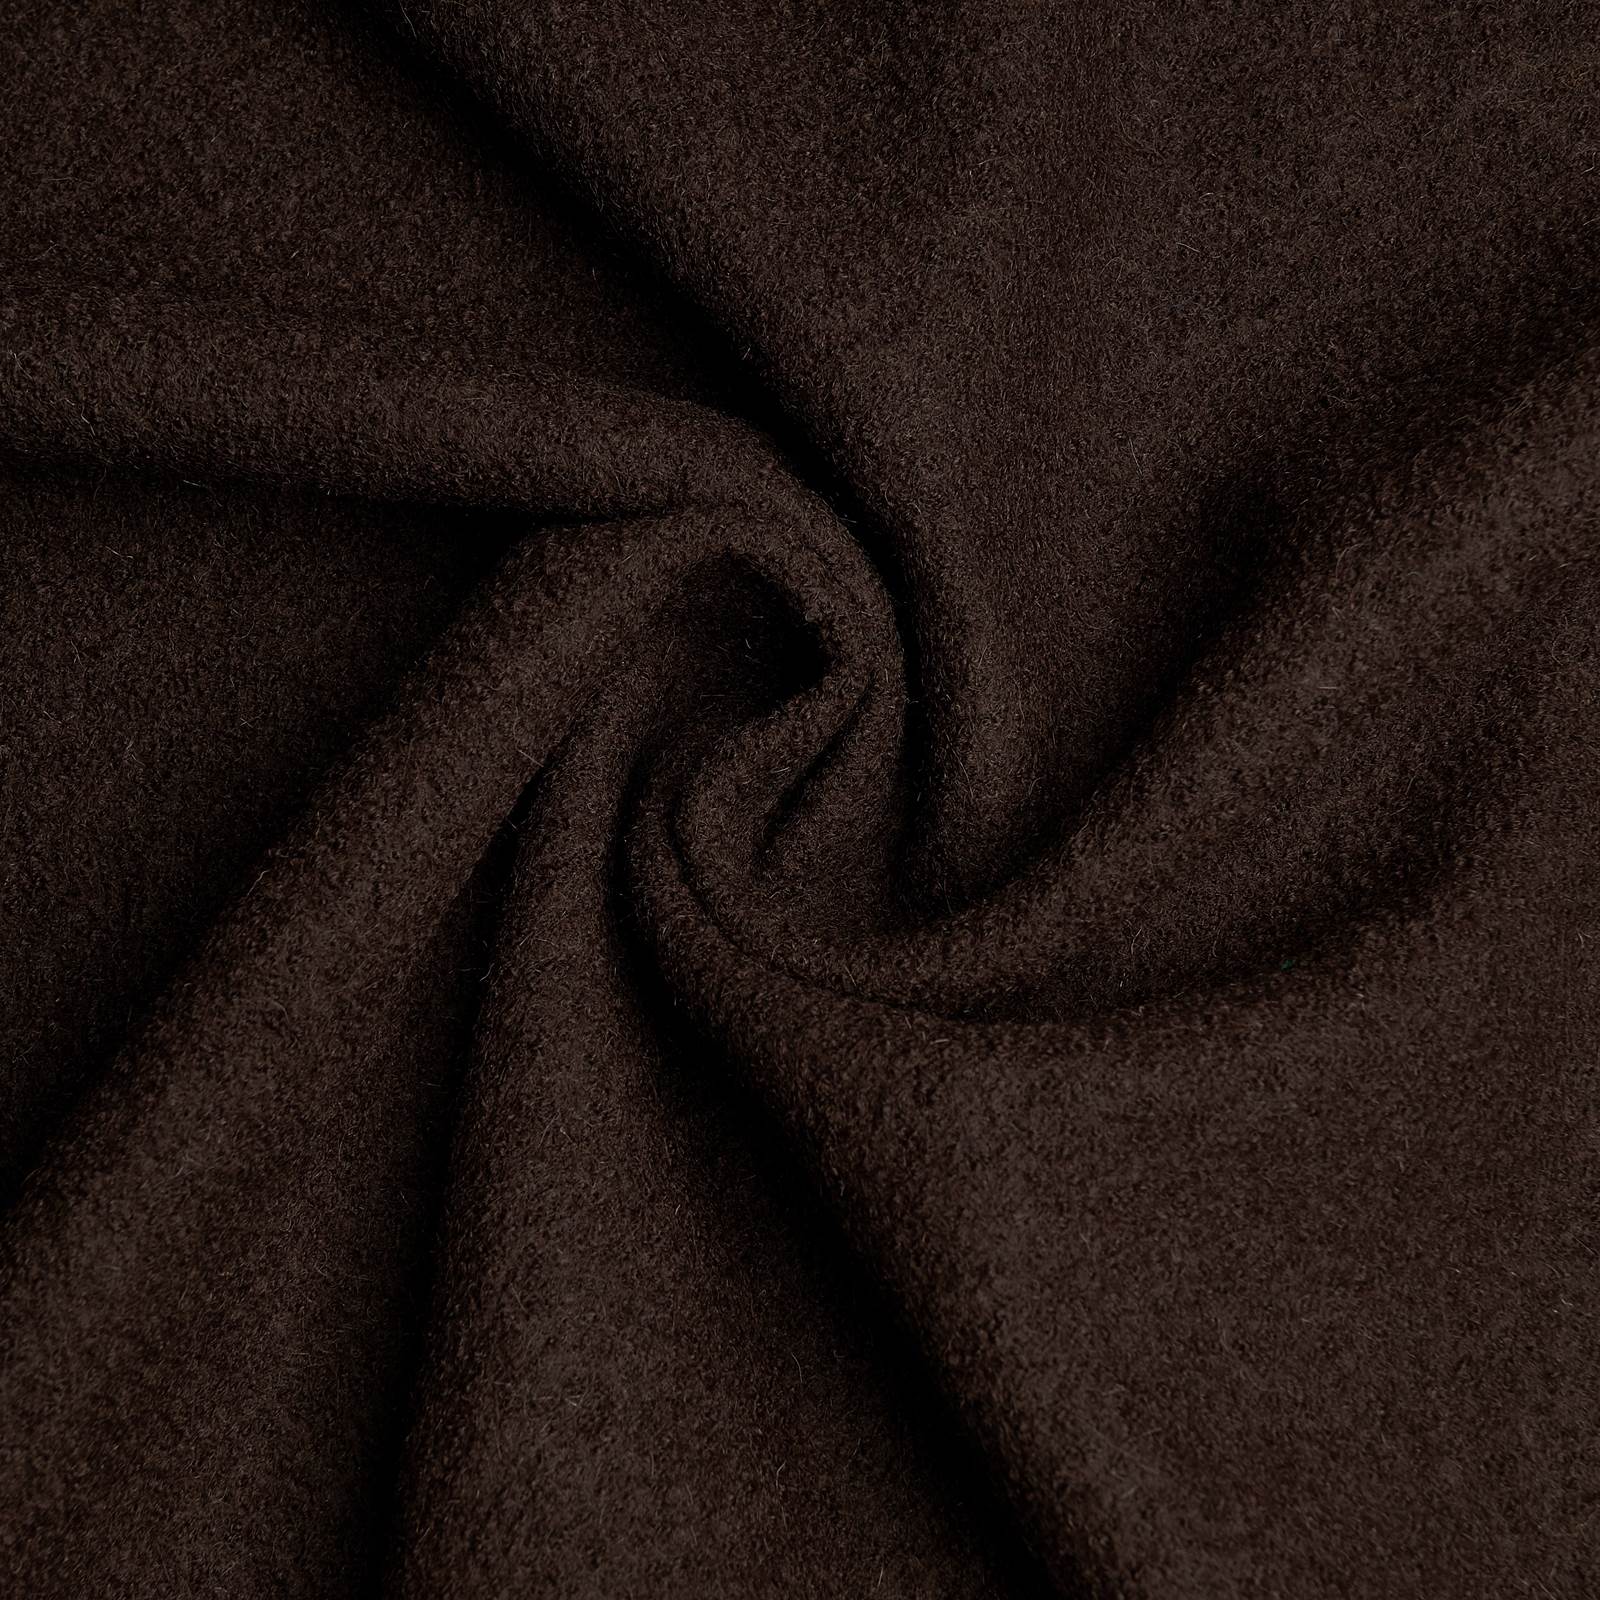 Fabian - tela de lana / loda cocida - 100% lana virgen (marrón chocolate)